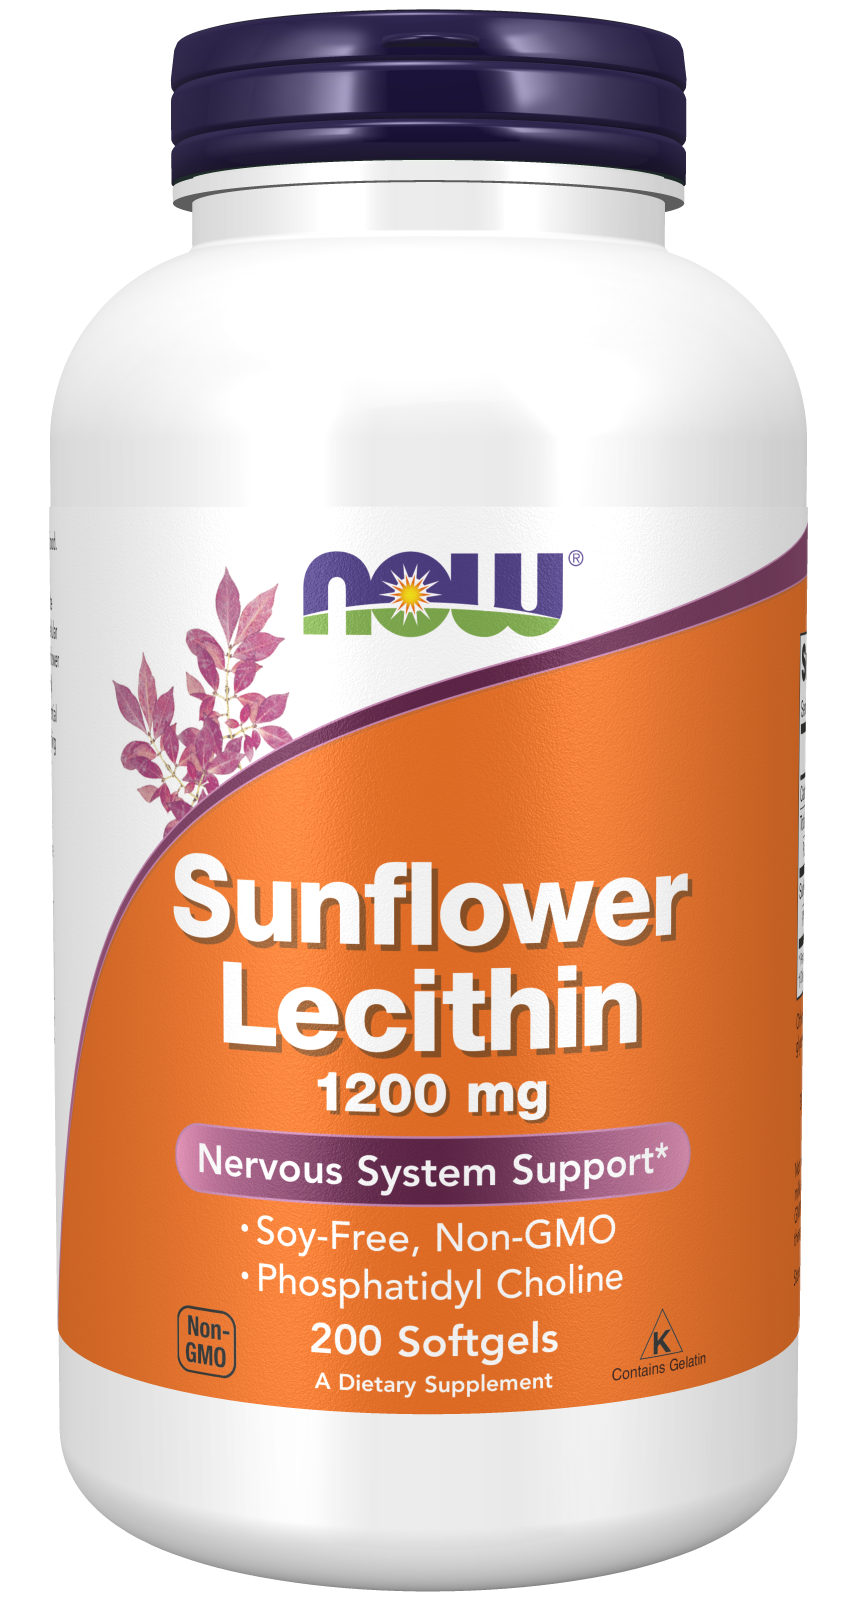 NOW Sunflower Lecithin